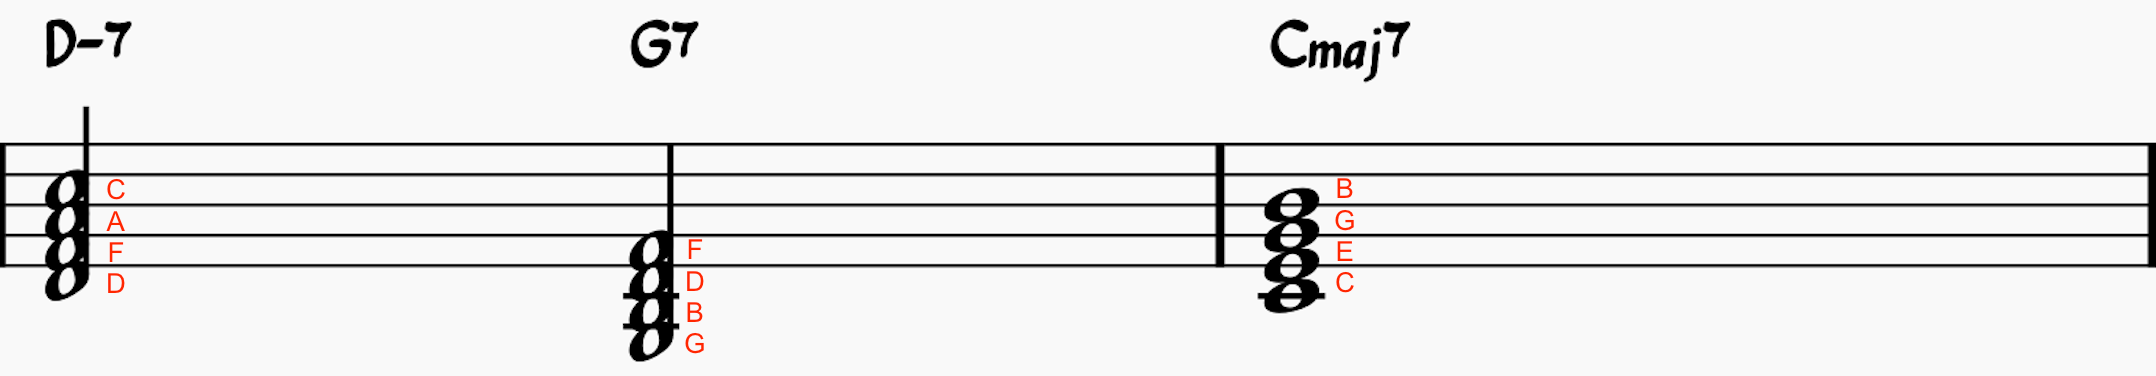 Root position ii-V-I chord progression in C major